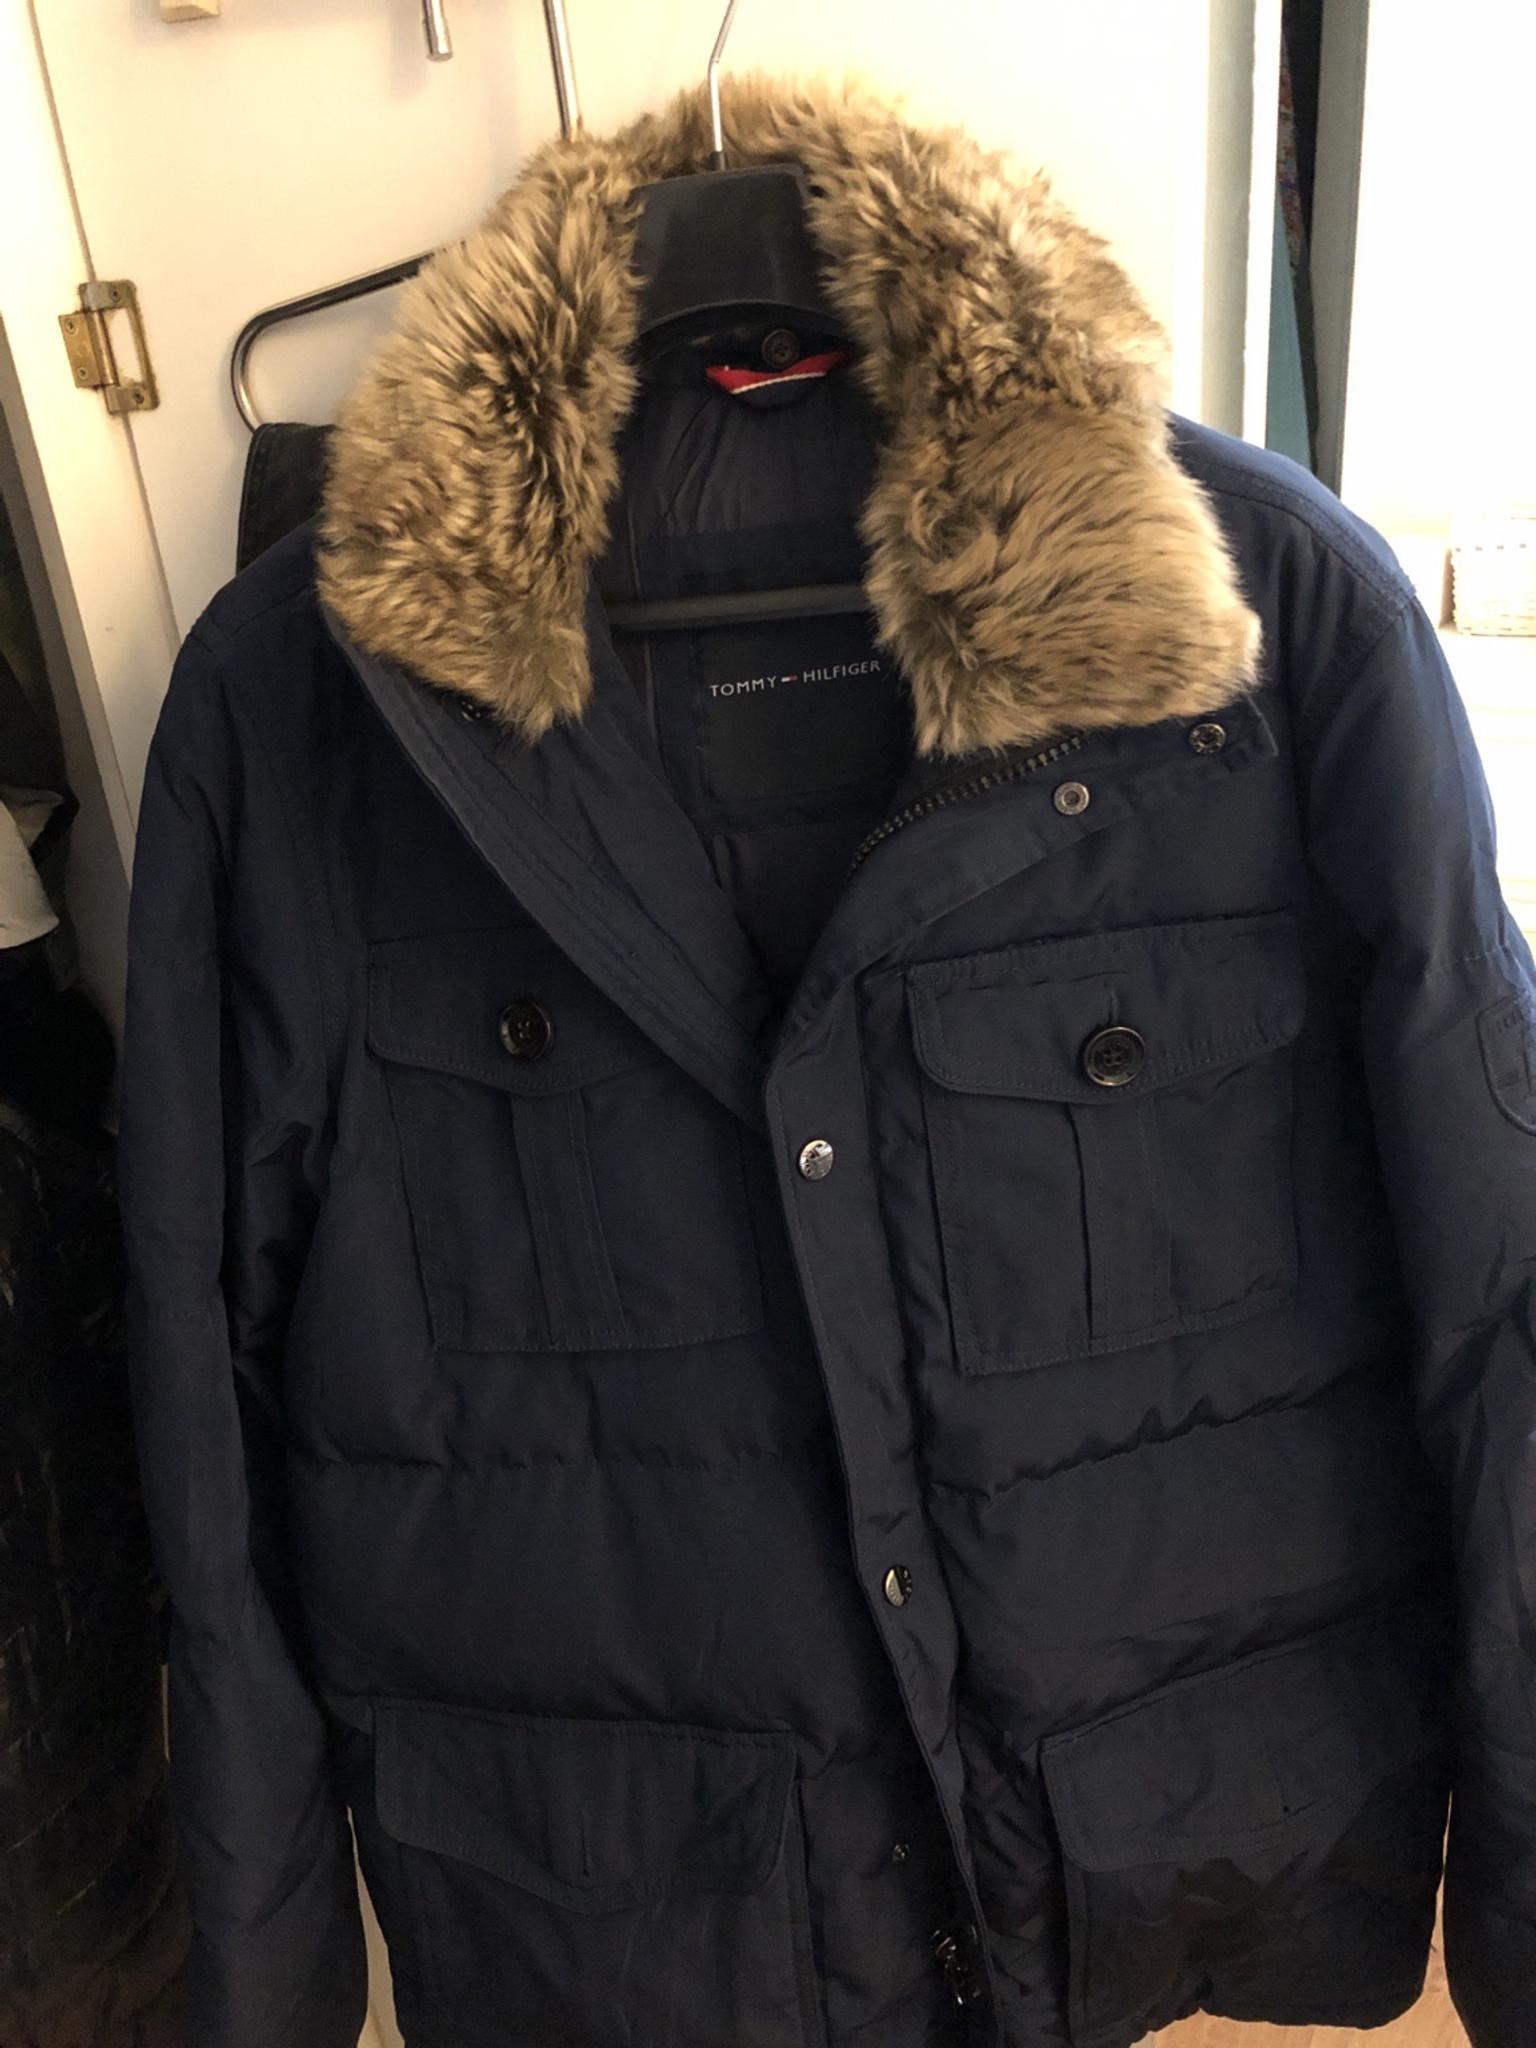 tommy hilfiger jacket 2019